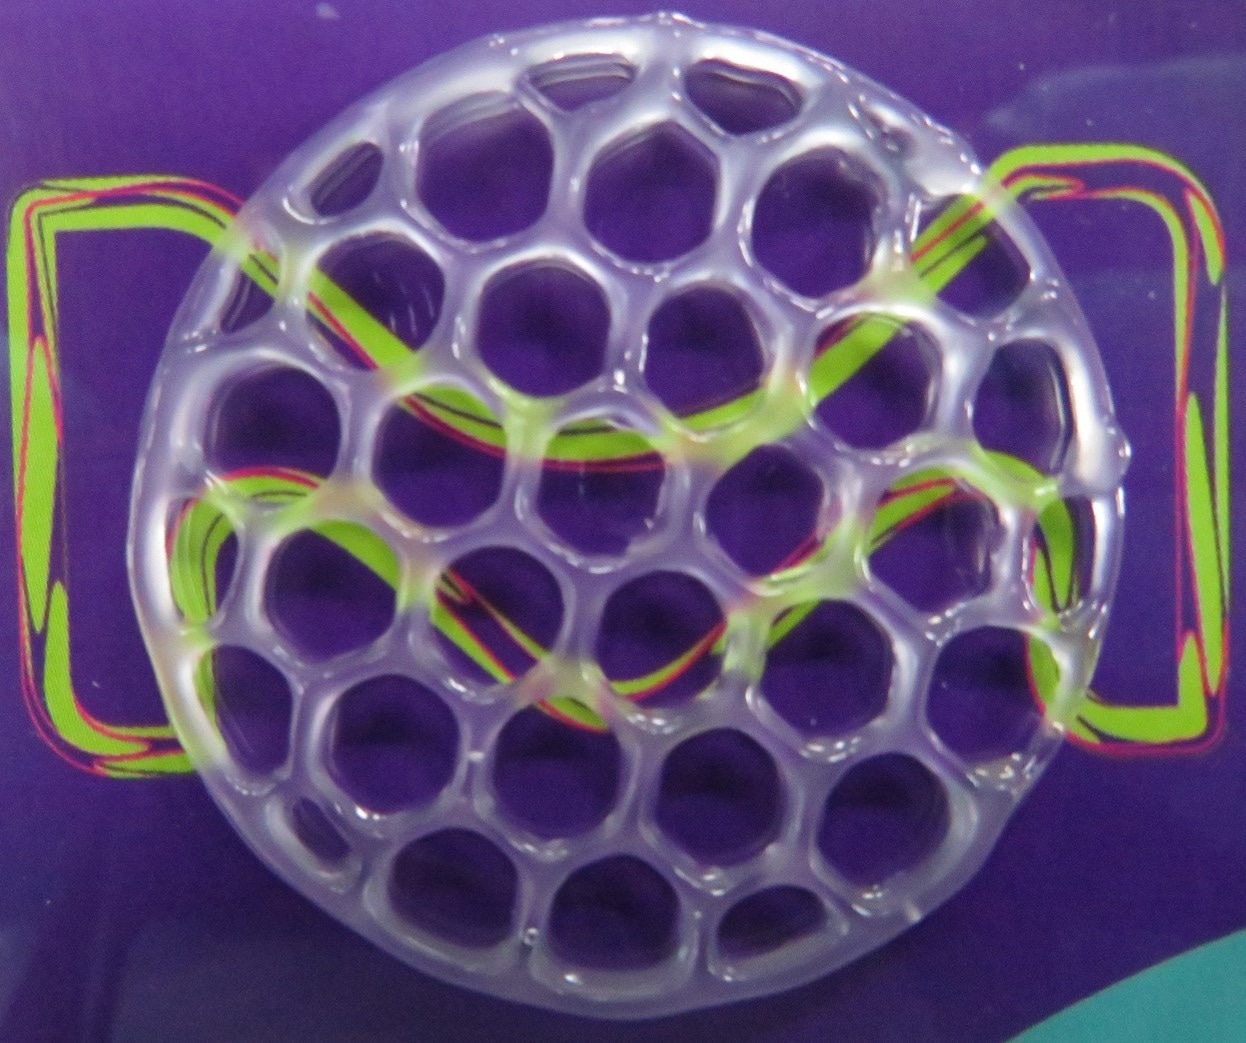 TissueFab® GelAlg LAP Bioink for 3D bioprinting applications